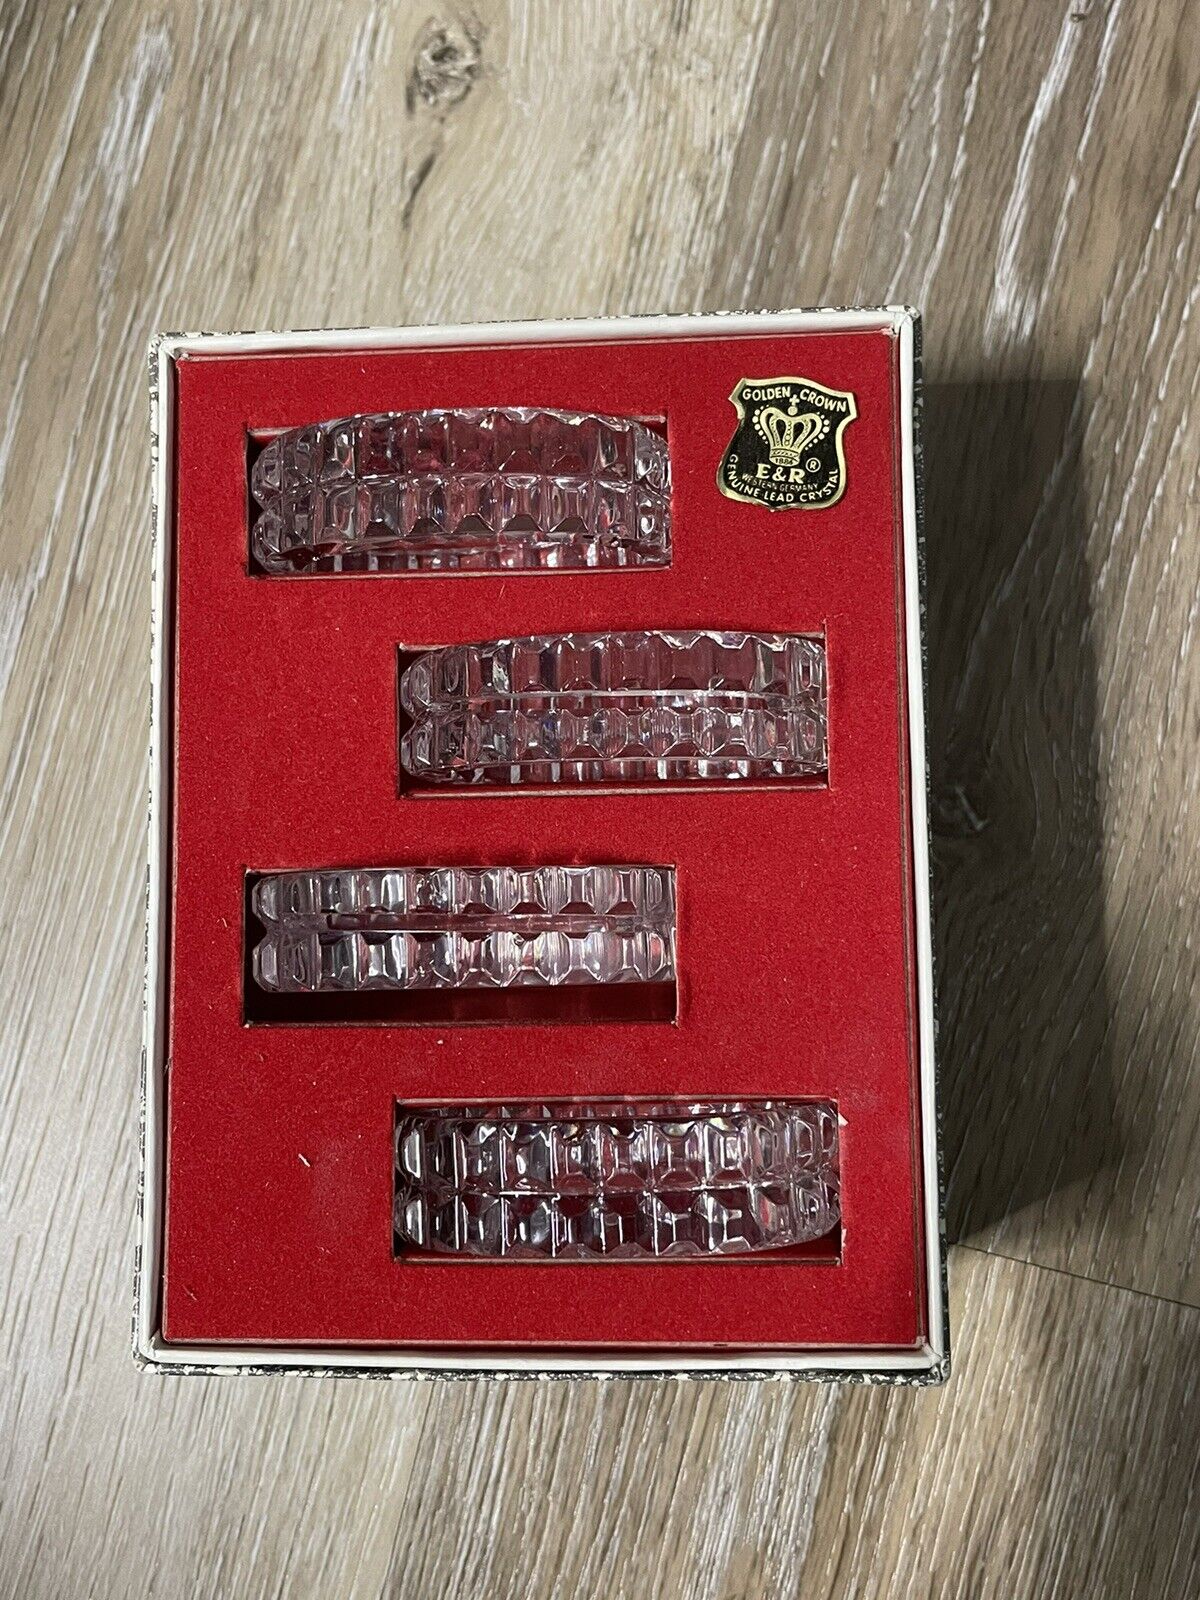 Vintage Golden Crown Crystal Cut Glass Napkin Rings Set Of 4 Western Germany